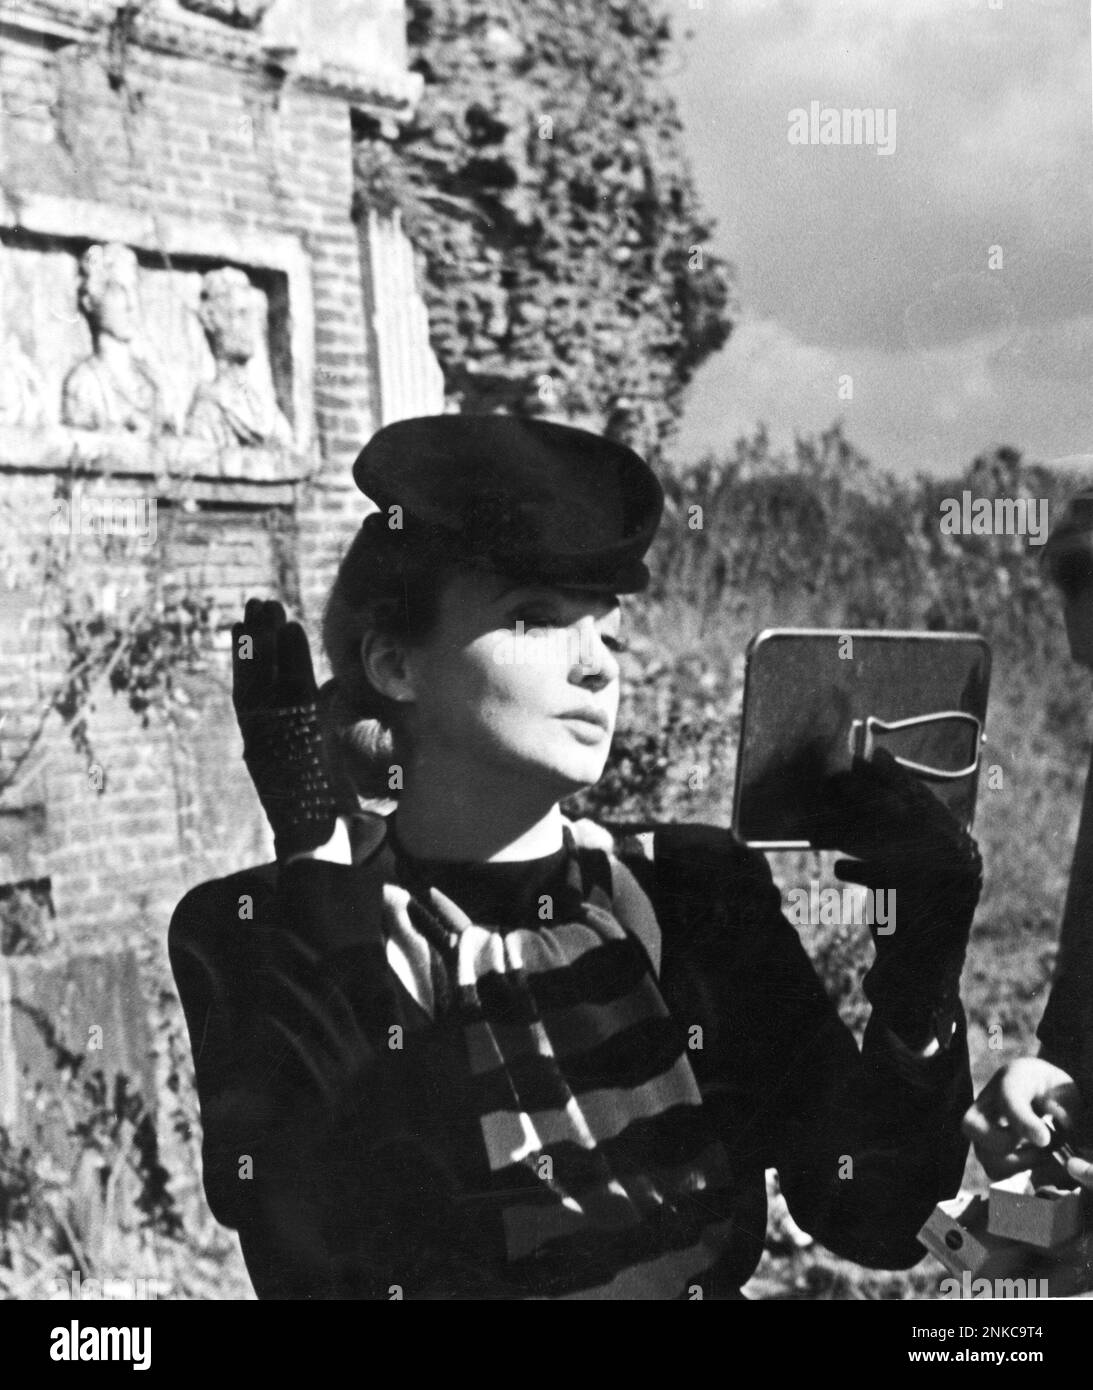 1942 c., Rome , ITALY : The Nazi Diva german singer and movie actress ZARAH LEANDER ( born Zarah Stina Hedberg , 1907 - 1981 ) in Via Appia Antica in Rome , Italy , during the release of movie LA RETE D' ARGENTO by Rolf Hansen . Photo by Germania-Film S.A.  - MOVIE - FILM - CINEMA - CANTANTE - NAZIST - NAZISMO - NAZISM - WWII - SECONDA GUERRA MONDIALE - portrait - ritratto  - cappello - hat - guanti - gloves - specchio - mirror - sul set ----  Archivio GBB Stock Photo